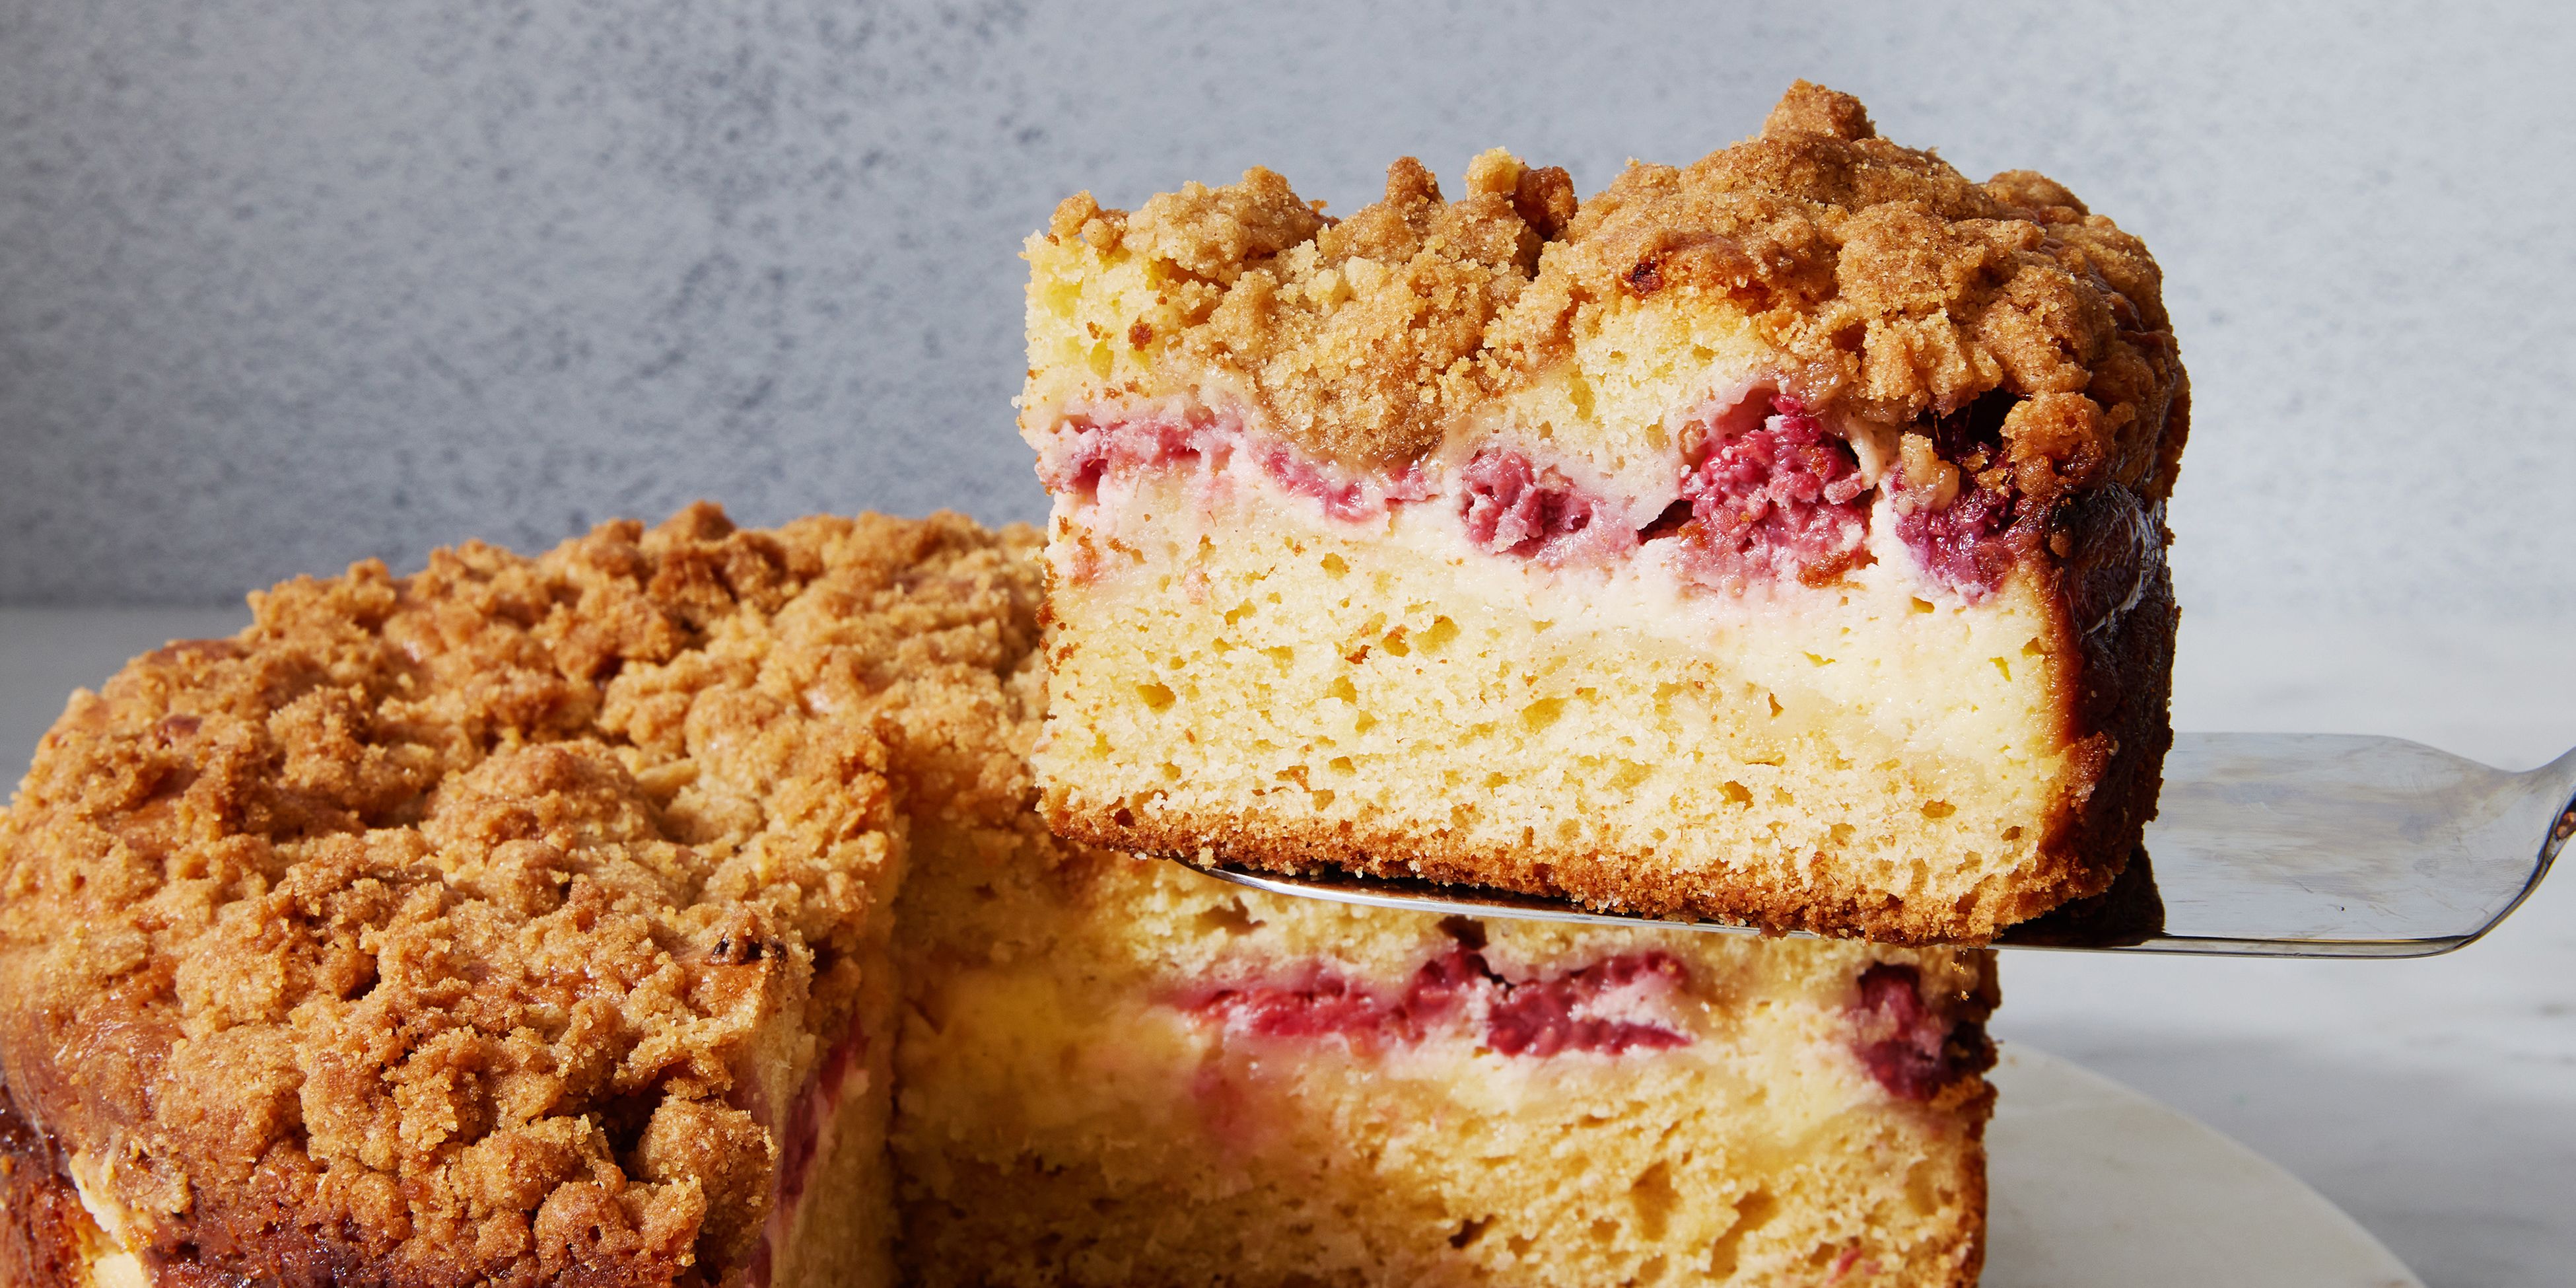 Raspberry Dream Cake | Easy Vanilla Cake with Raspberry Filling